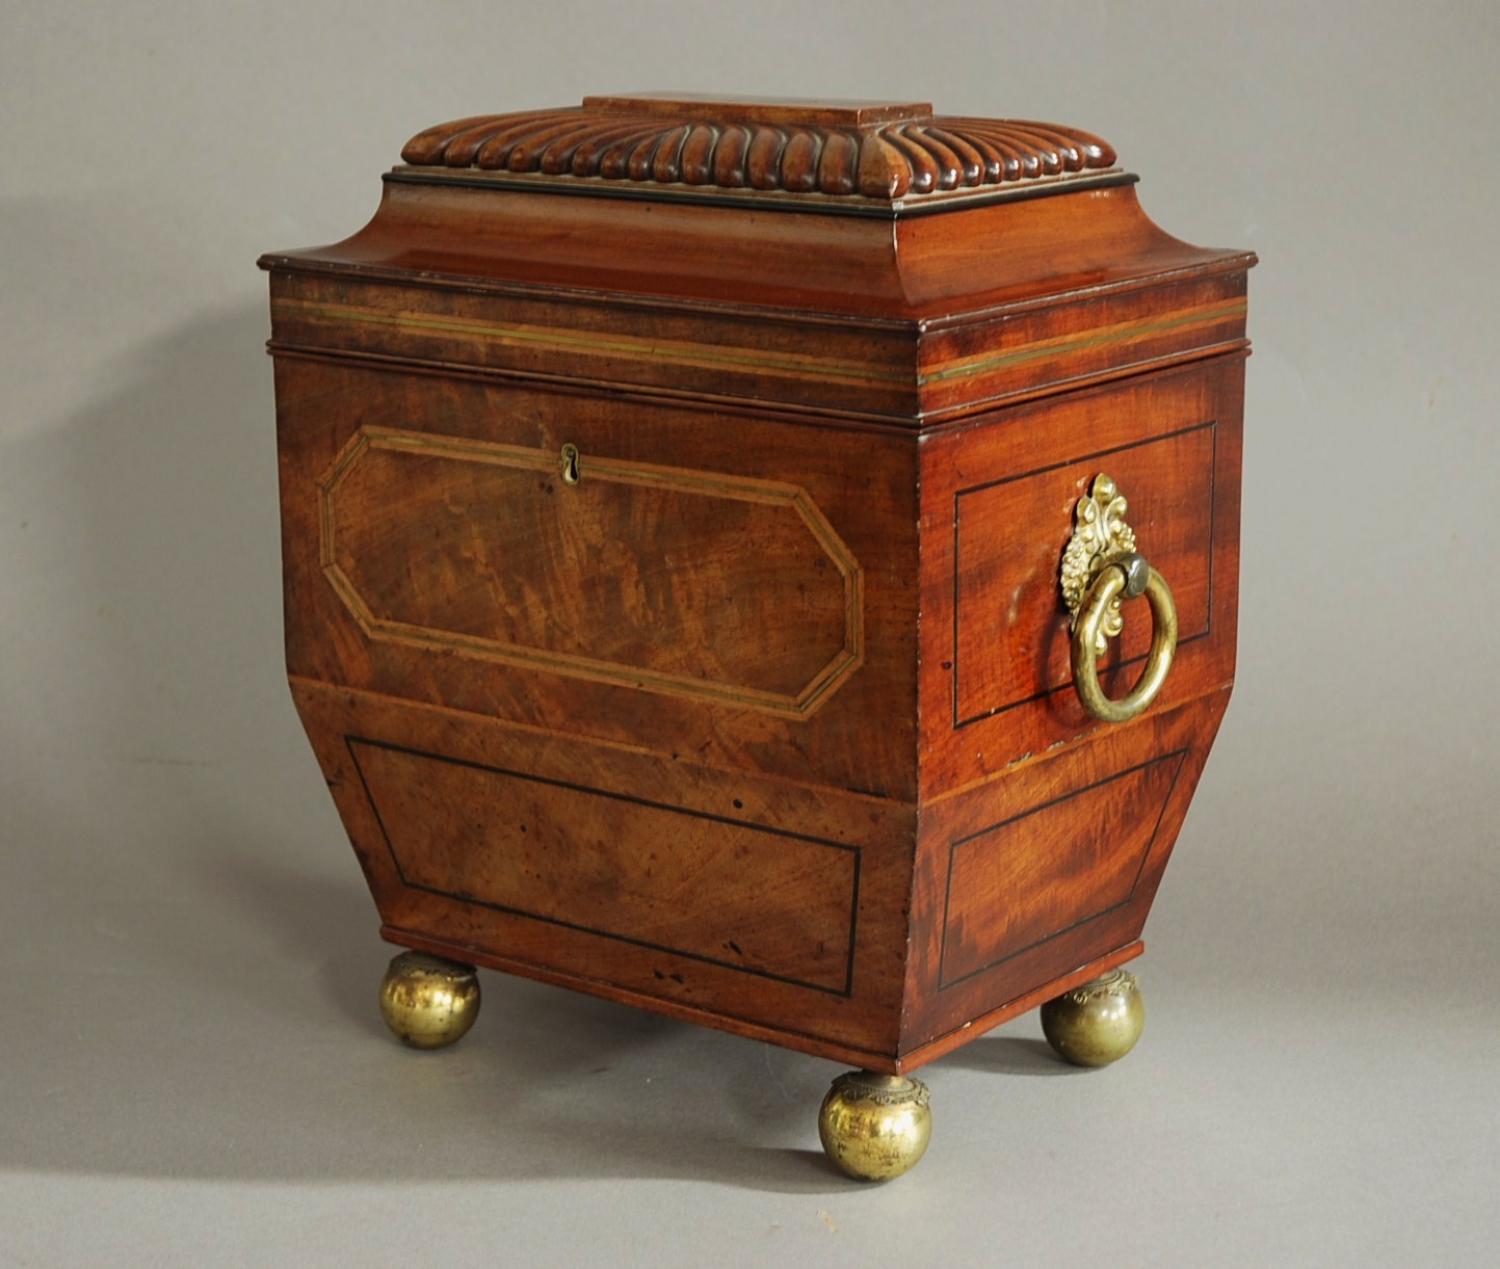 Superb Regency sarcophagus stationary box